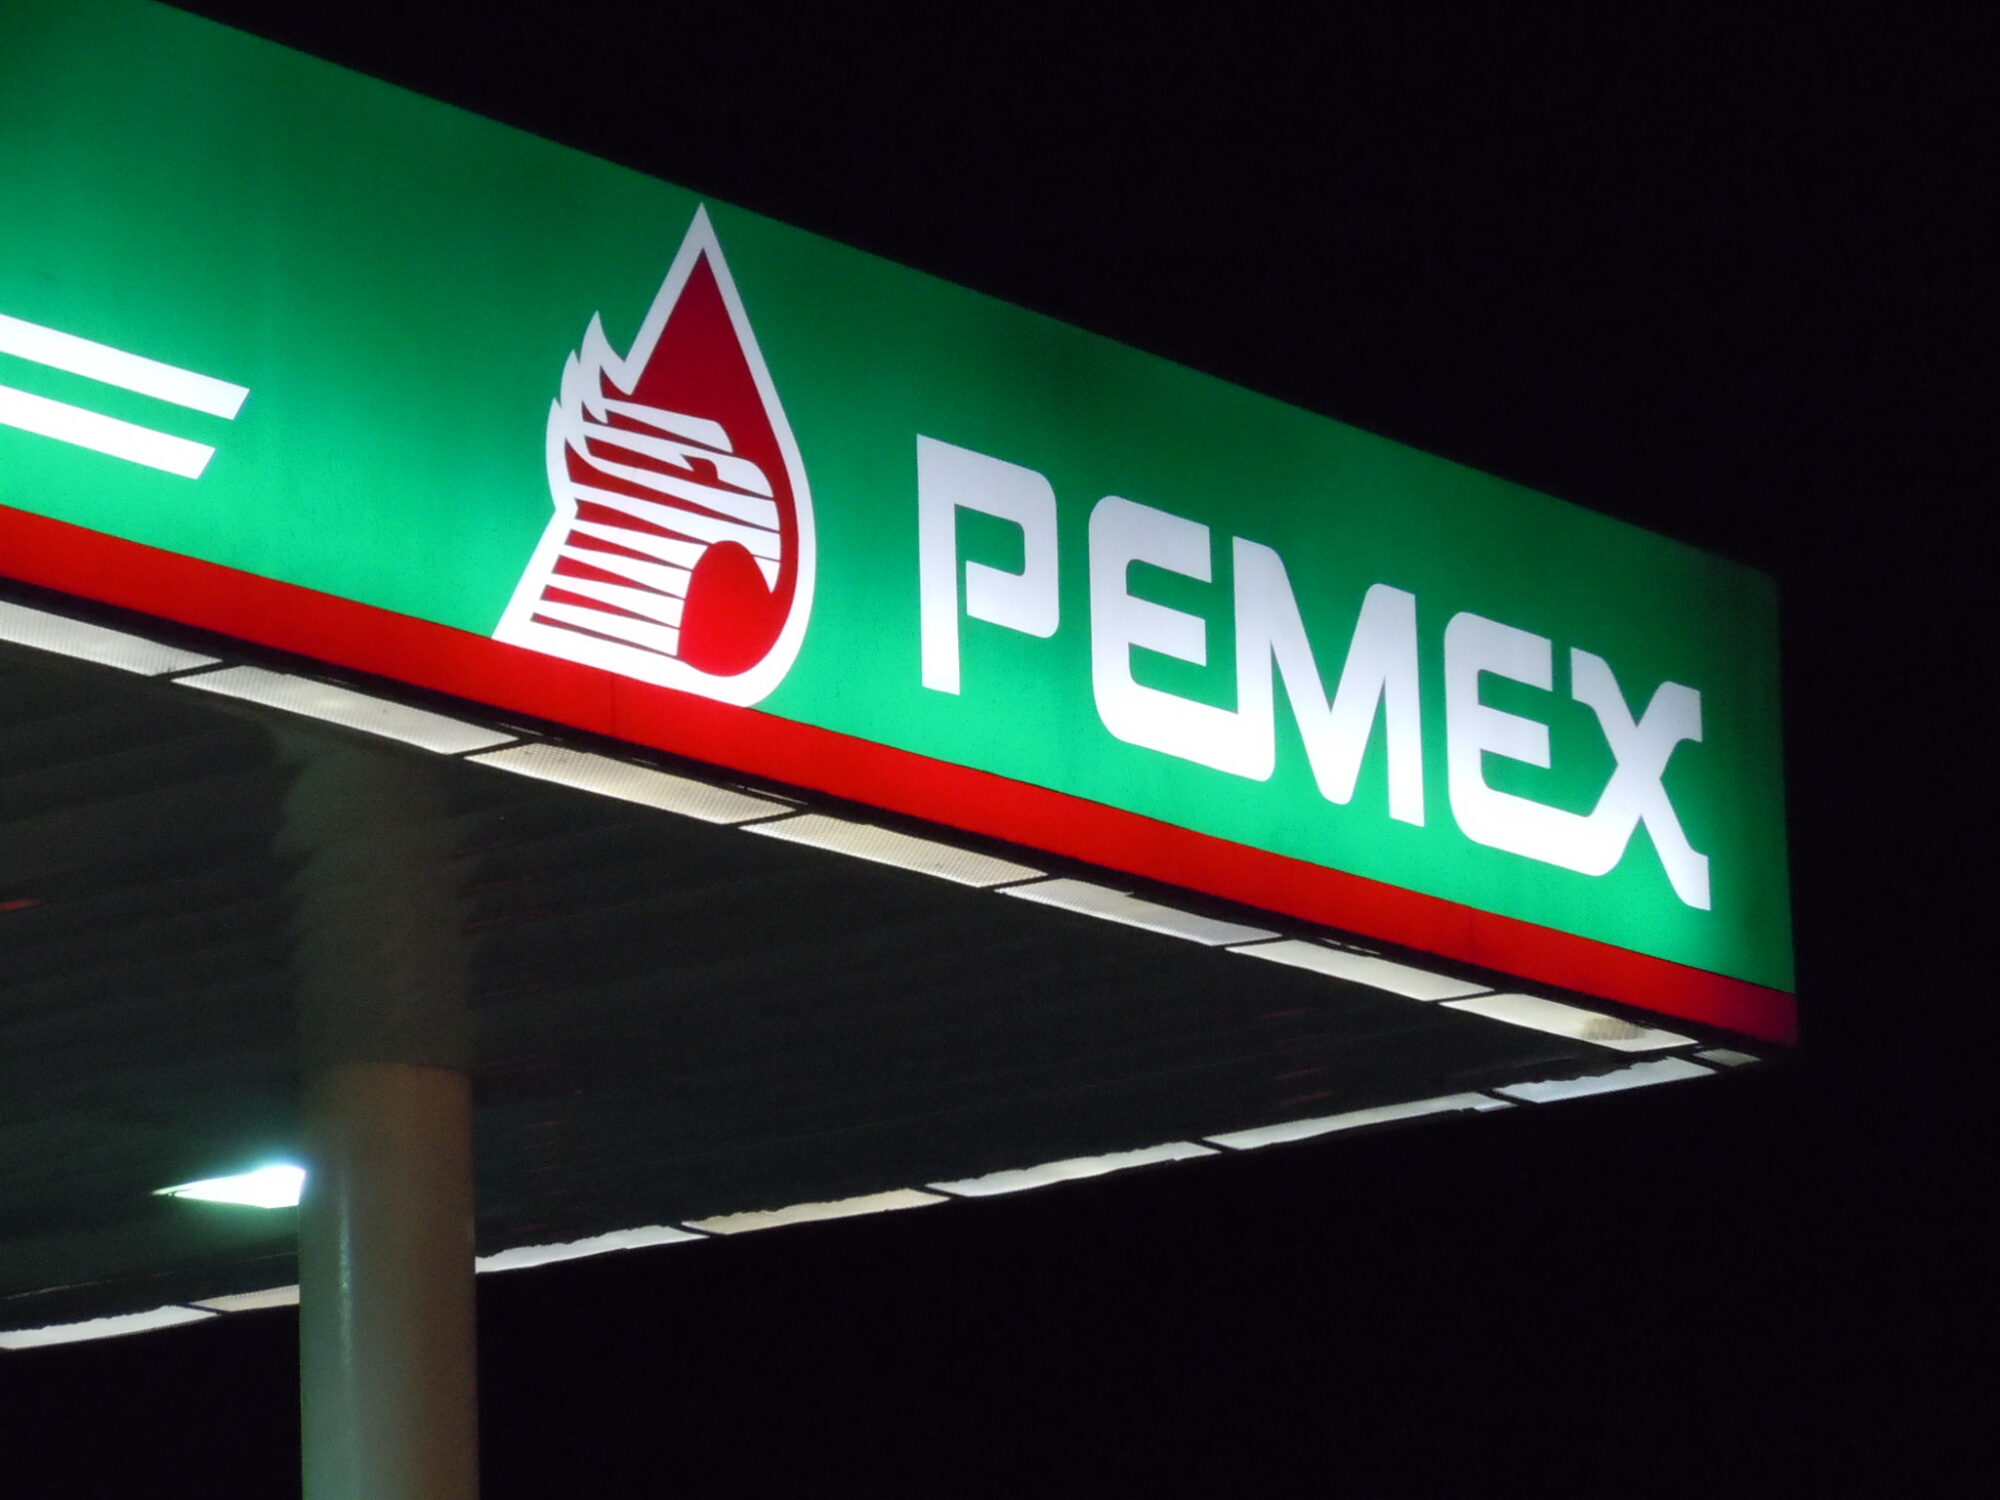 <p>A Pemex, a empresa petrolífera estatal do México, está entre as 20 empresas que mais emitiram gases de efeito estufa na história (Imagem: <a href="https://flickr.com/photos/rutlo/5337912858/in/photolist-98Gcwj-2kxnjiC-5RUD2j-5PoozE-5exo2c-5extnM-5extrr-2Wsbq-9A5HXA-2kS9tjz-5Pj5bz-9CcXrP-4Cfkeq-DR5PBj-a6eDUp-4zHg4i-52a2pD-Q1tnL-5JEUwc-H9YjhD-bnG2aC-jULkWJ-z9mpT-RaYUi-5YNSB-5ERvHK-PMGy5-Nyo4x-9m4wZW-F1nGJ-4xwncC-2kSKqiC-mBb3wB-8rzavu-qiFUhm-qAfGM2-irQ2x-8ruDPZ-52kkDV-6HMtgK-6HMqPR-9idBmt-bF4356-6HMqai-dRN6GU-6HMpfM-7eF6Zp-6HMpLv-6HMpP8-6e4bsj">Flickr</a>)</p>